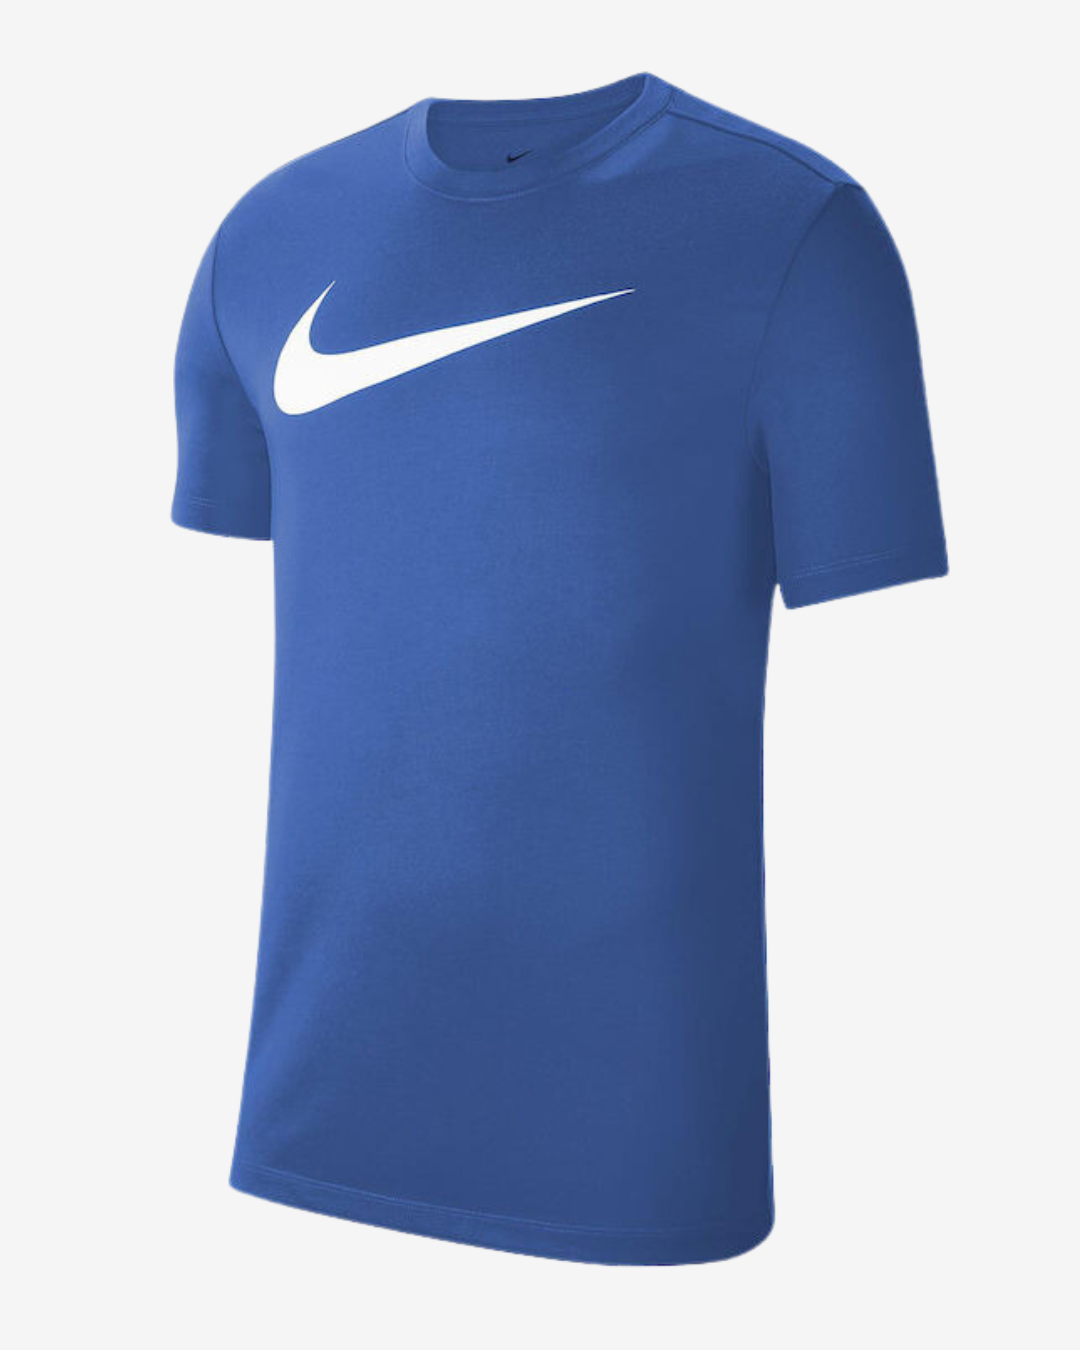 Nike Dri-fit park 20 t-shirt - Blå - Str. M - Modish.dk